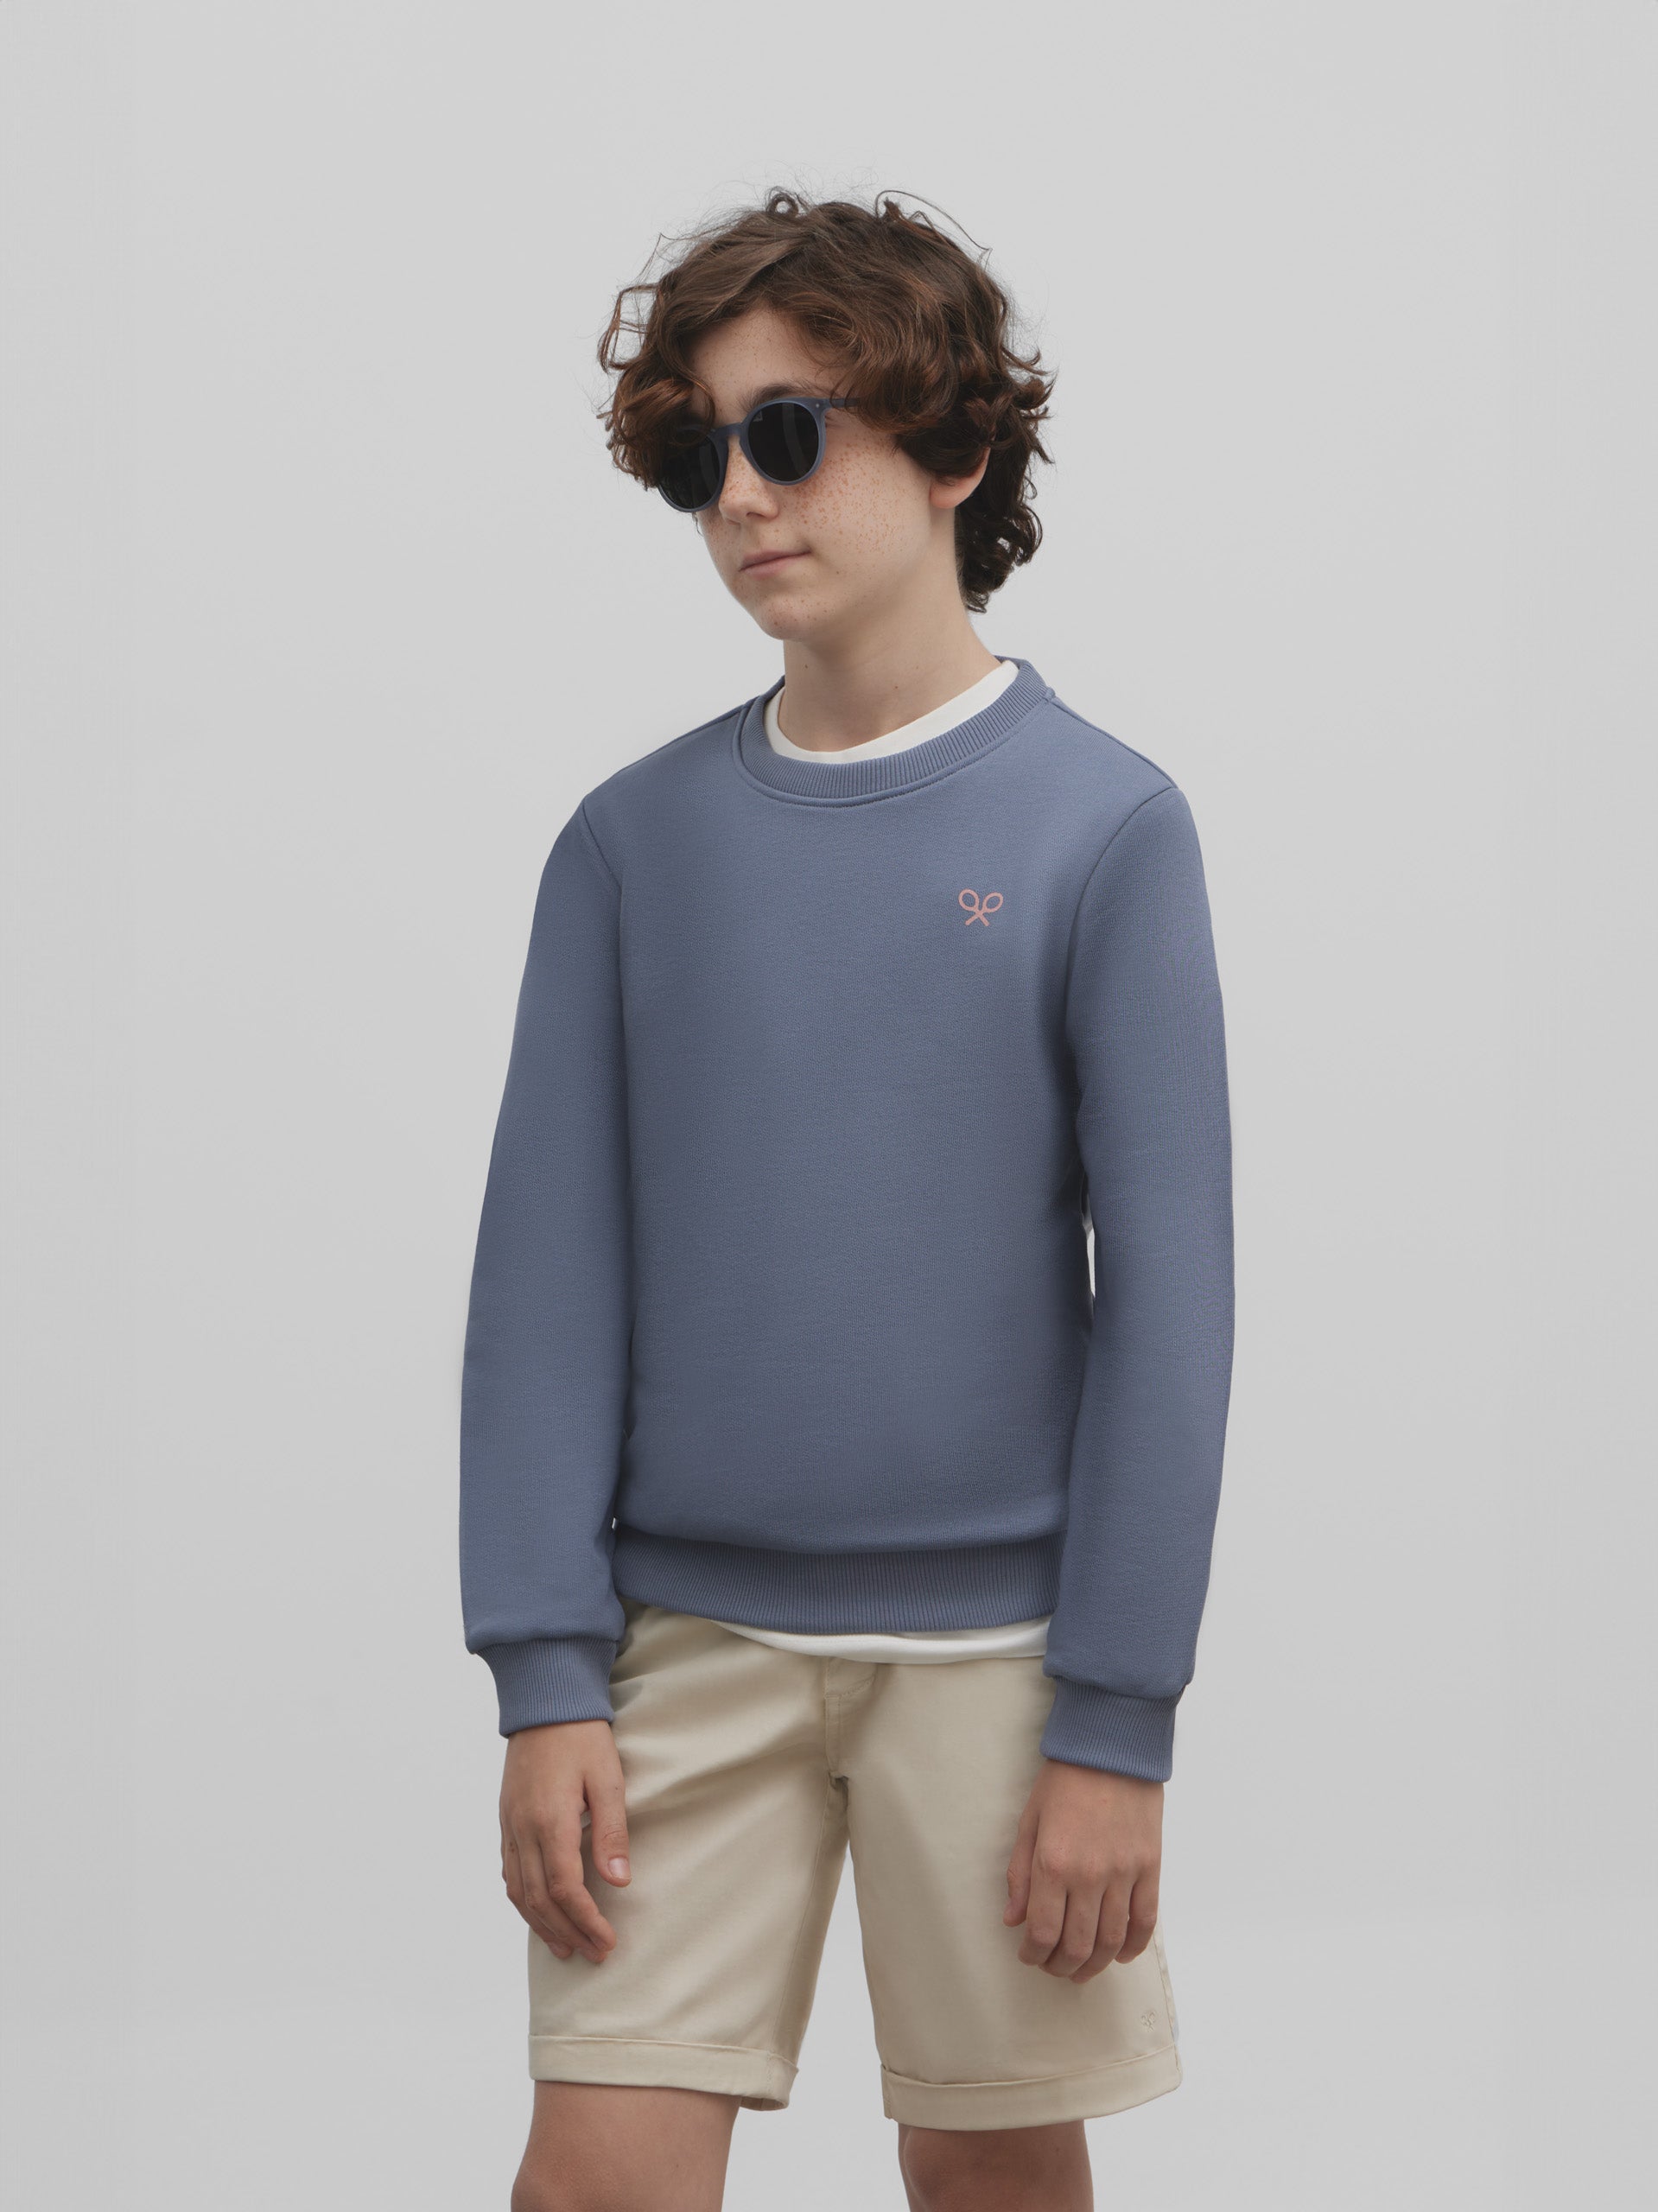 Kids sun lover sweatshirt blue gray